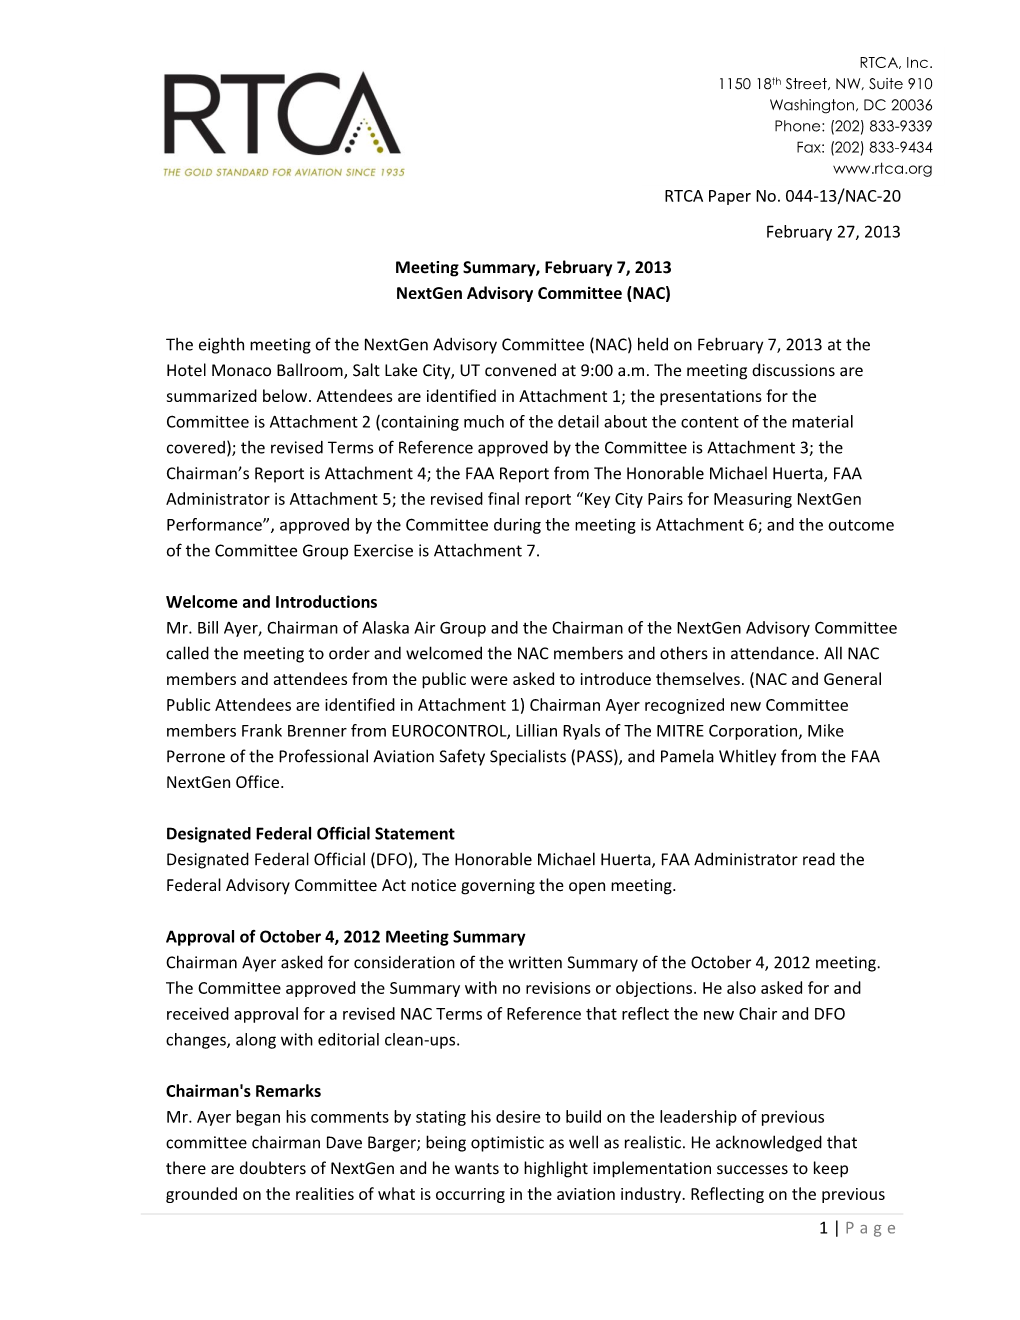 1 | Page RTCA Paper No. 044-13/NAC-20 February 27, 2013